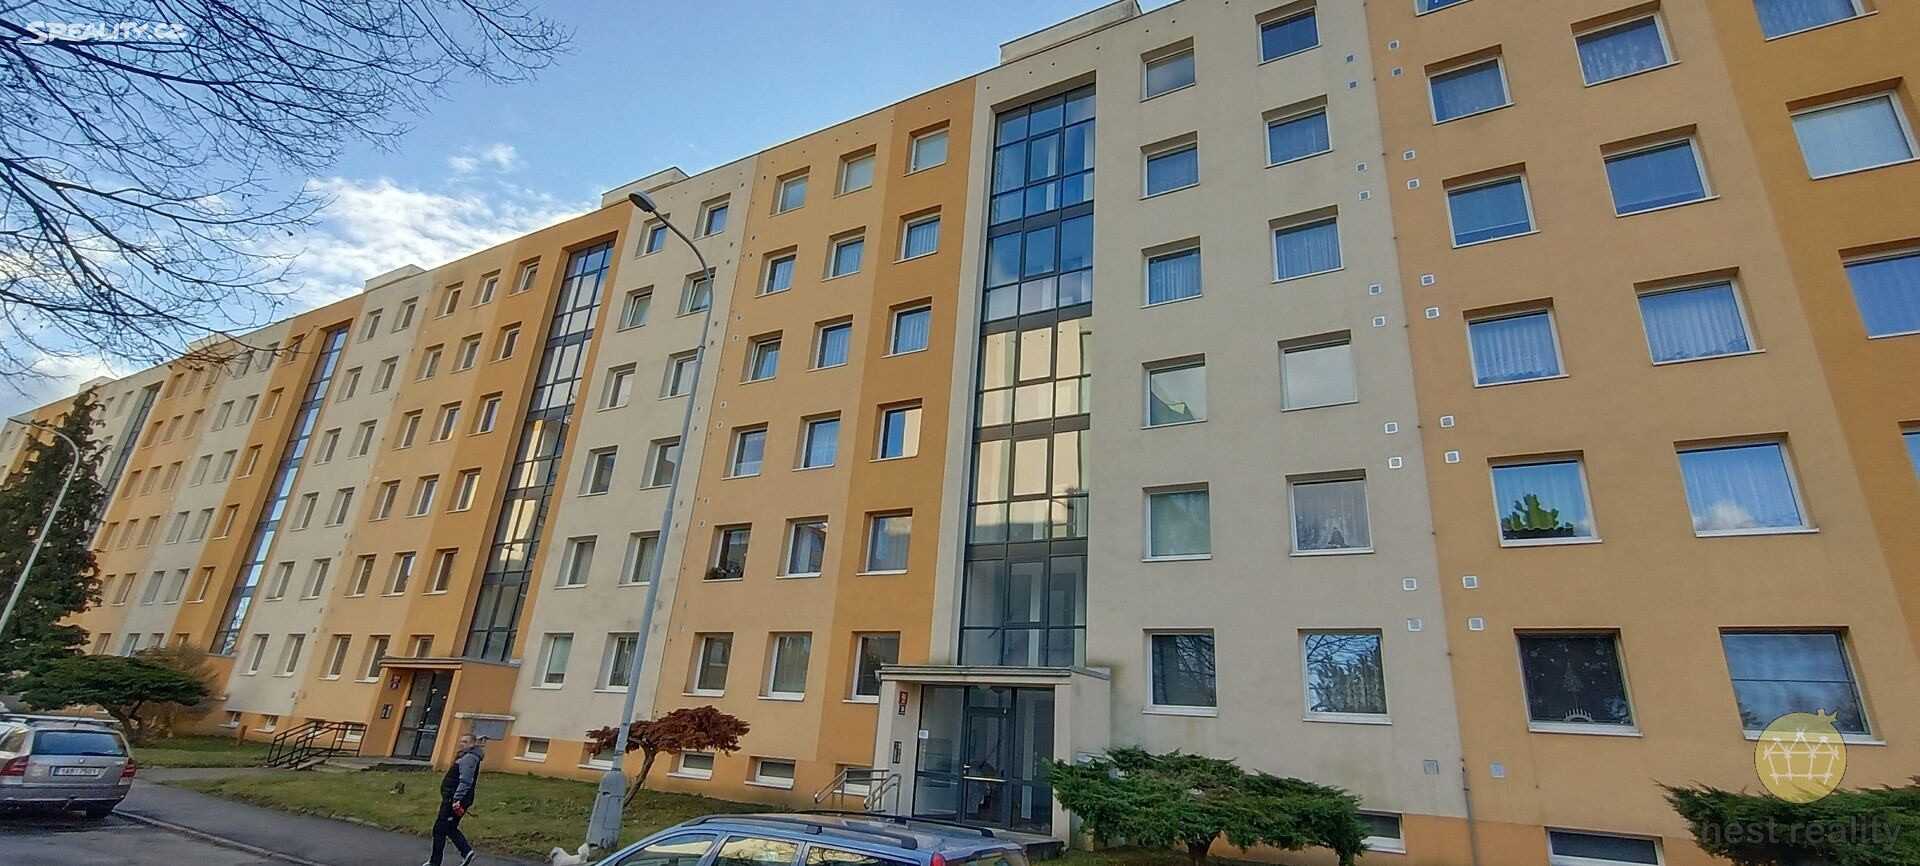 Prodej bytu 1+1 44 m², Chvatěrubská, Praha 8 - Čimice